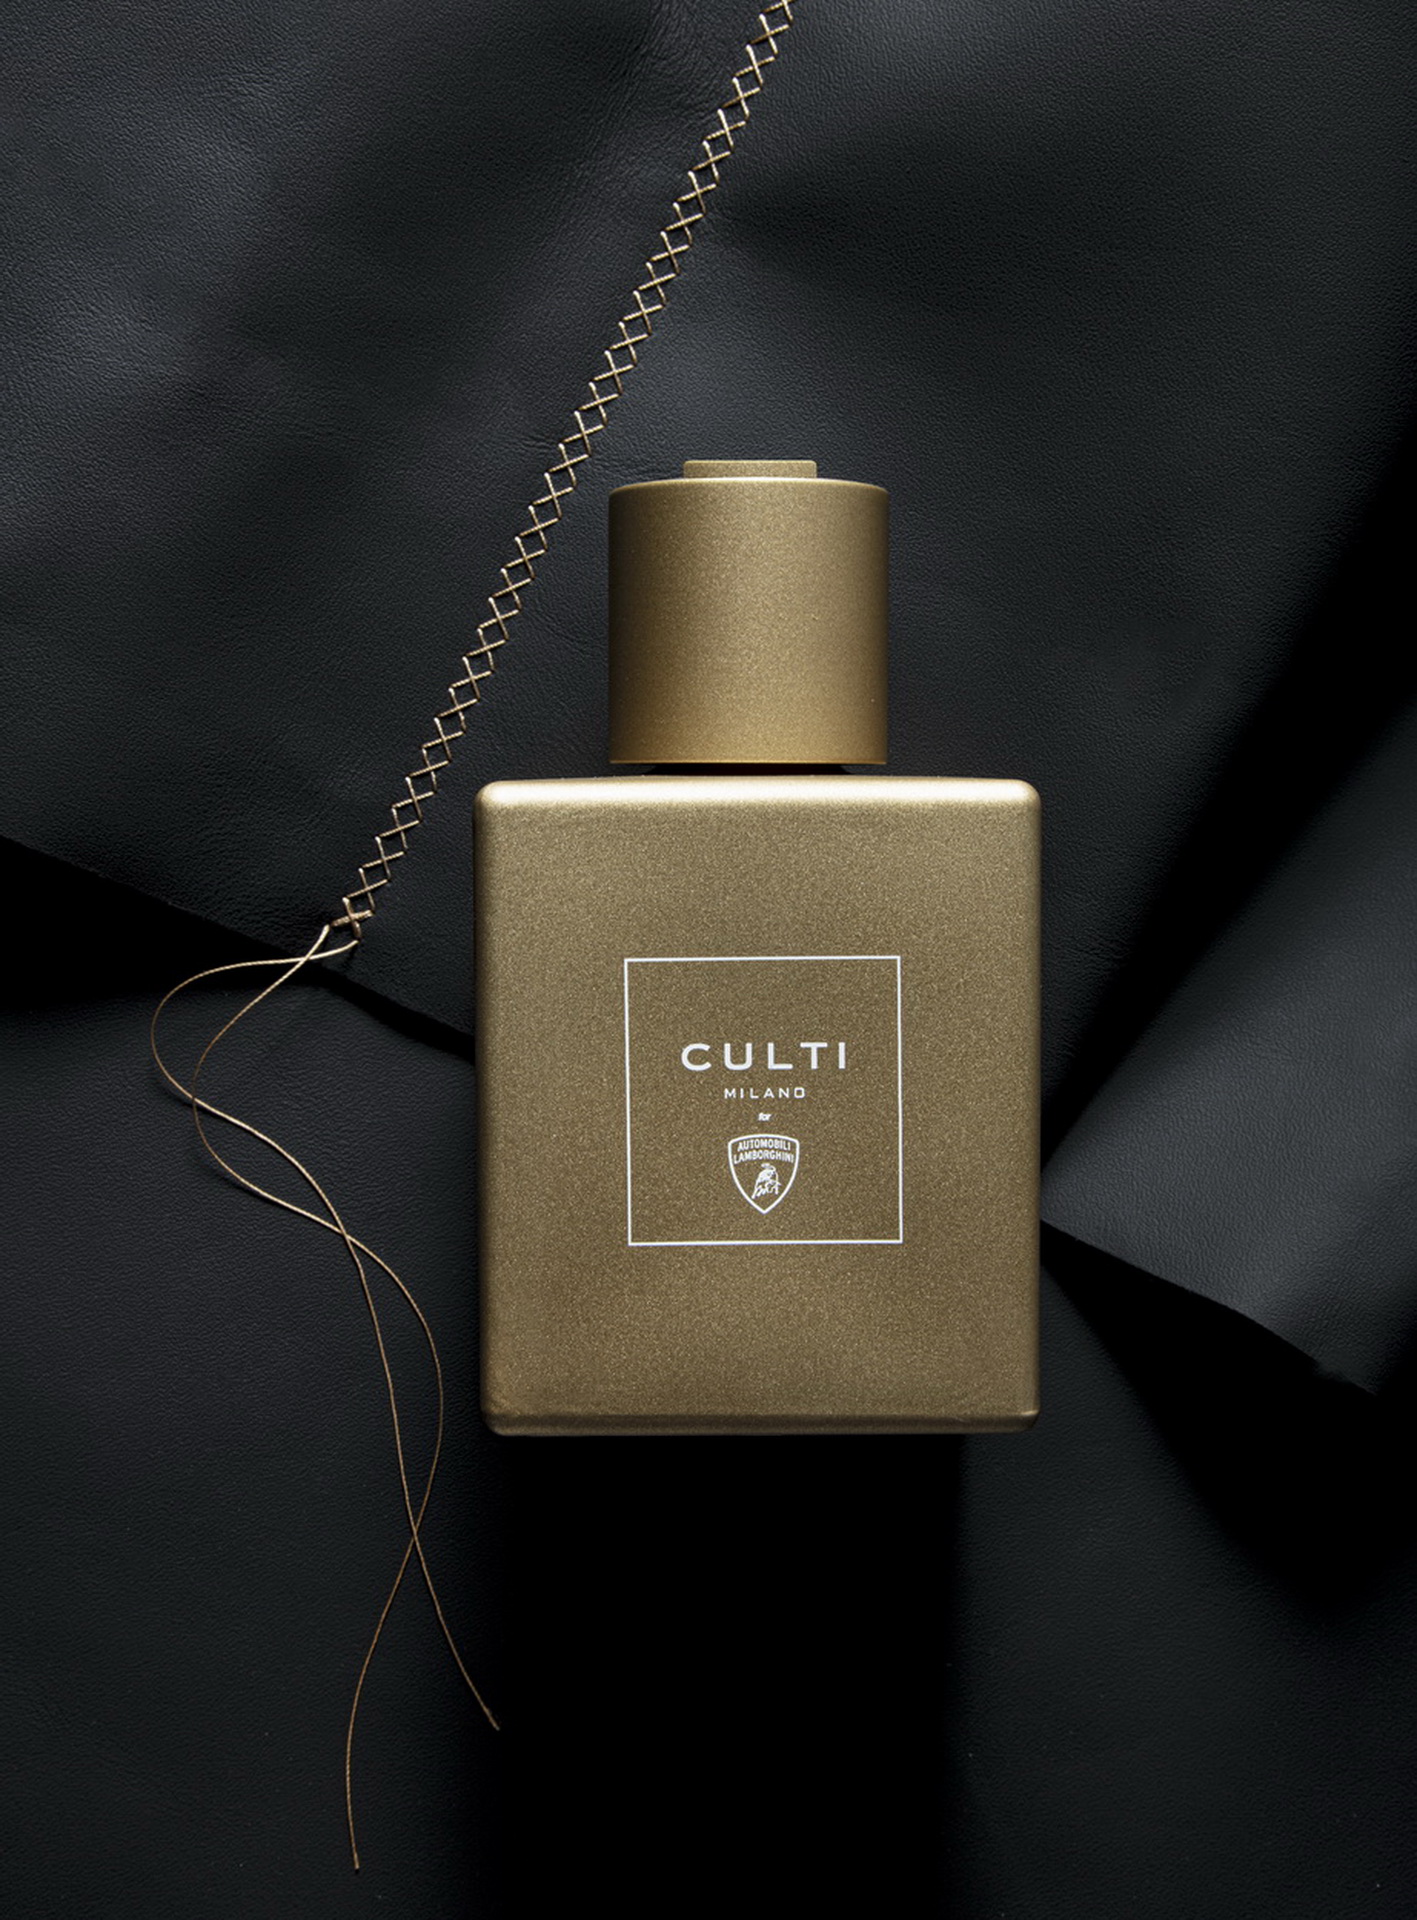 Automobili Lamborghini создали парфюмерный проект в коллаборации с Culti Milano